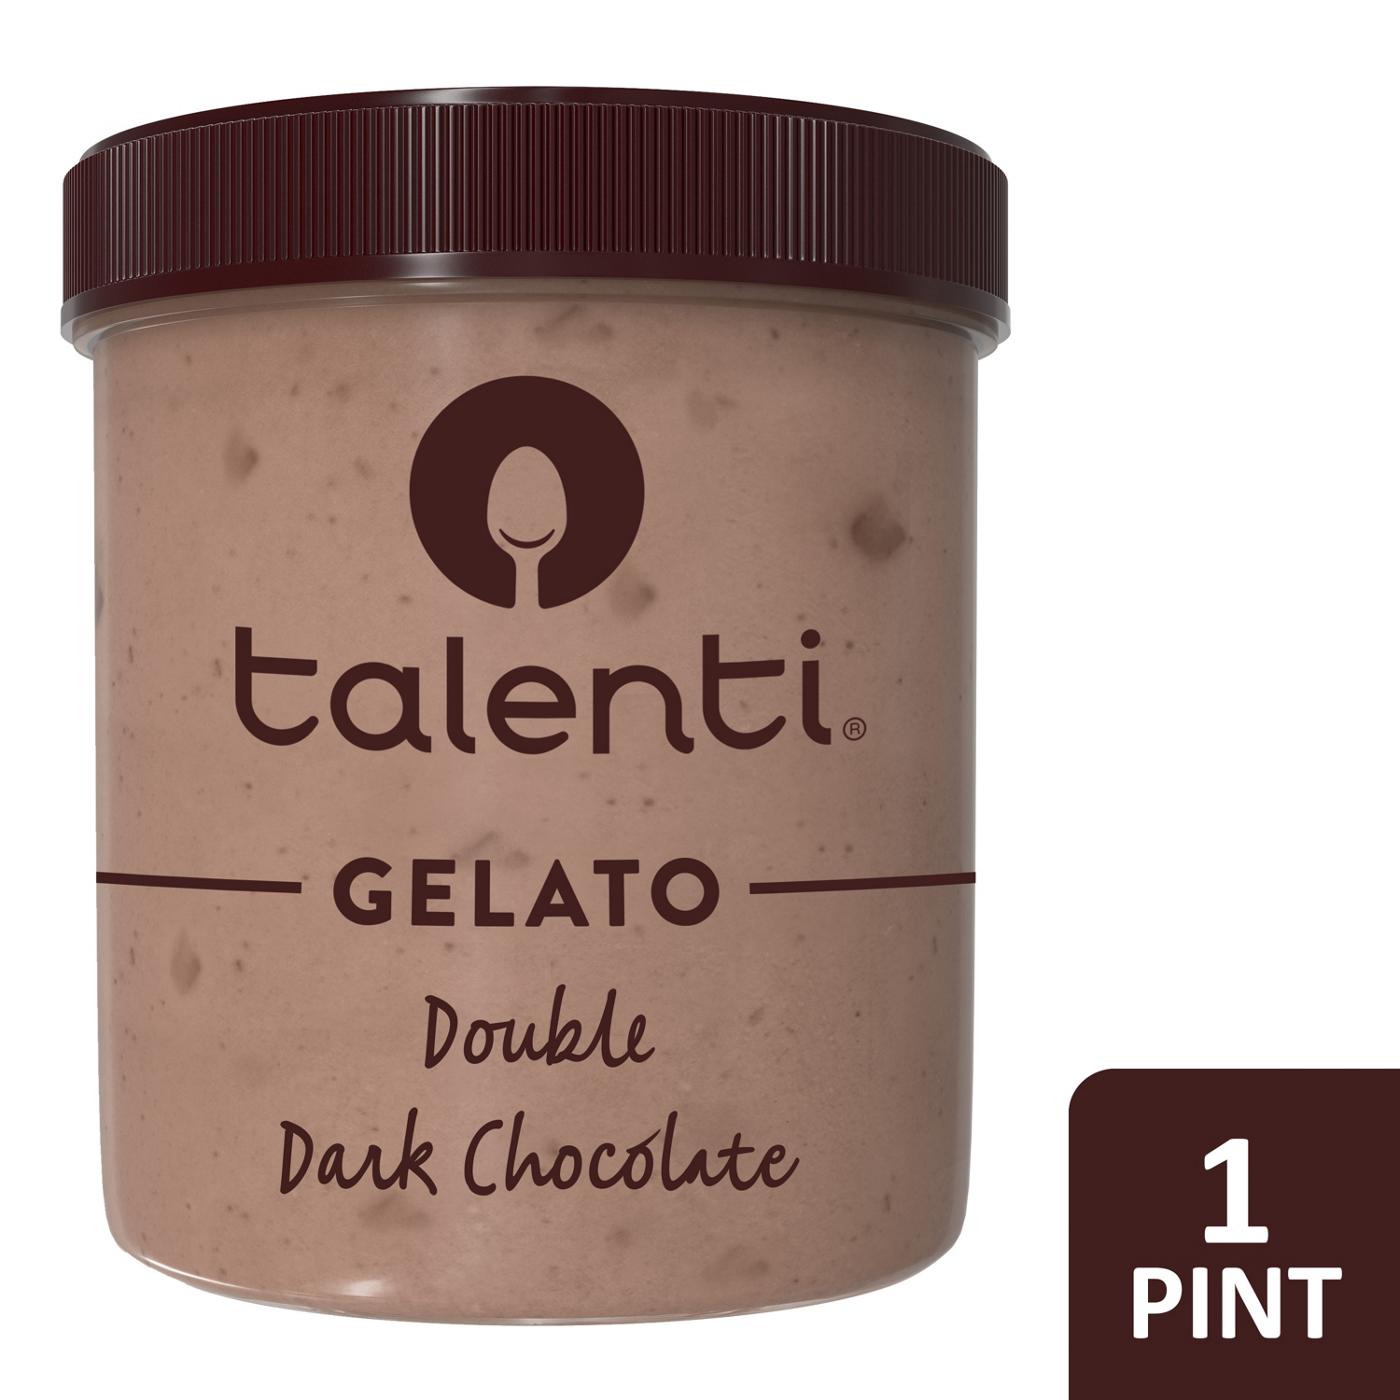 Talenti Gelato Double Dark Chocolate; image 2 of 2